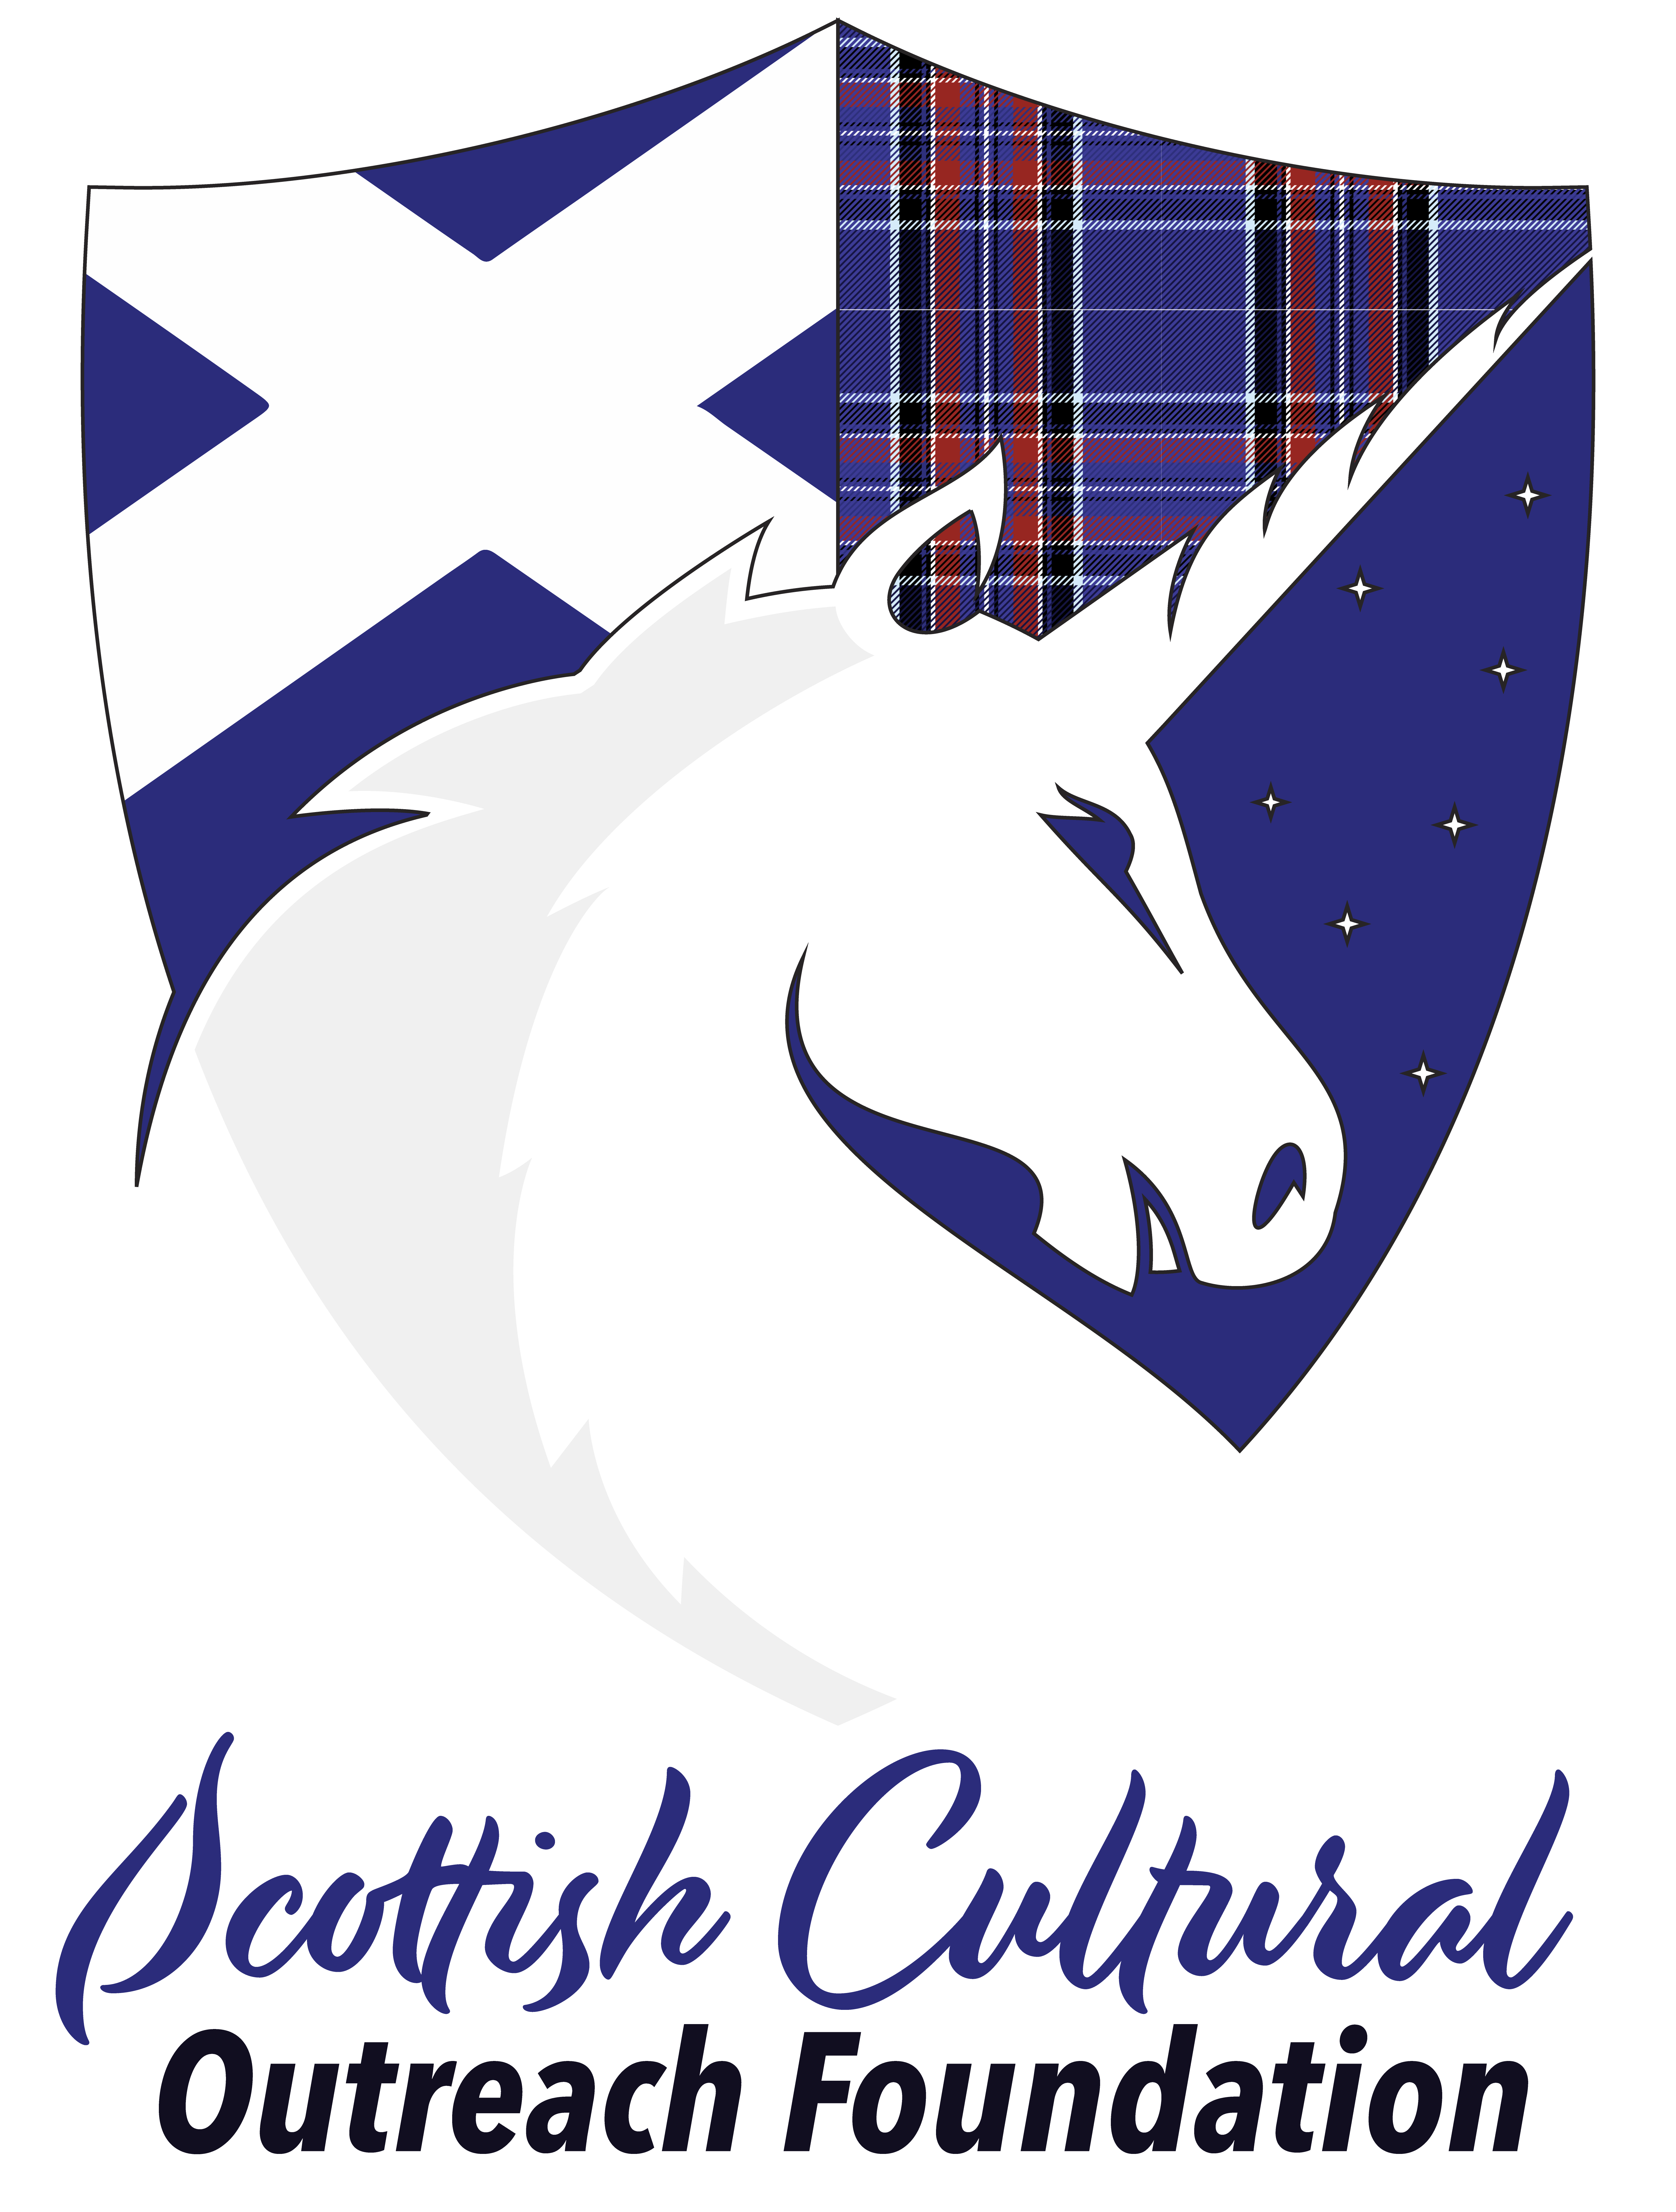 Scottish Cultural Outreach Foundation